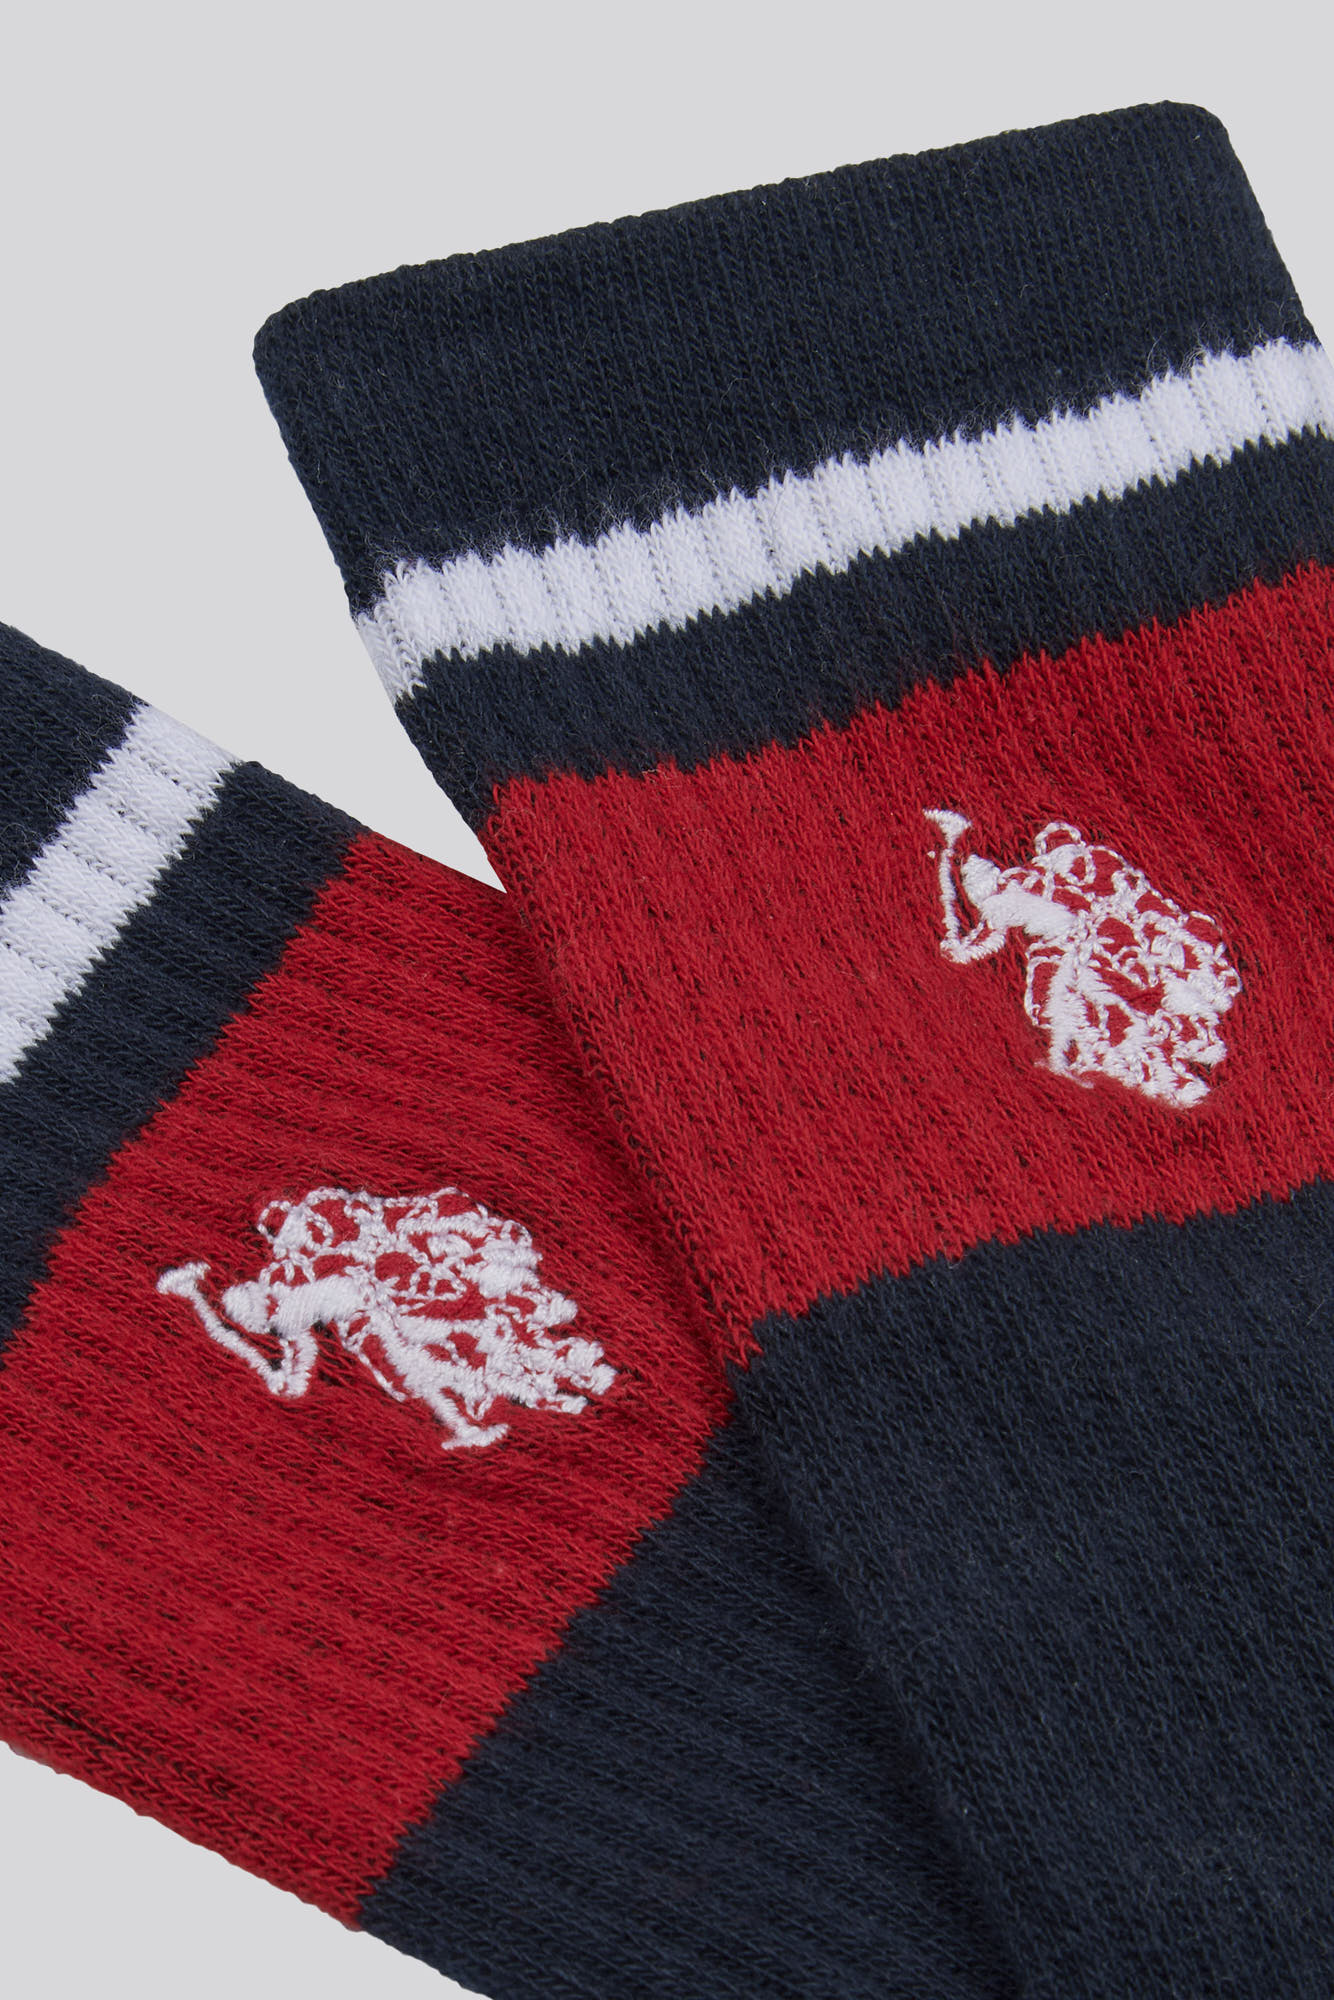 Three Pack Brand Stripe Sports Socks in Dark Sapphire Navy